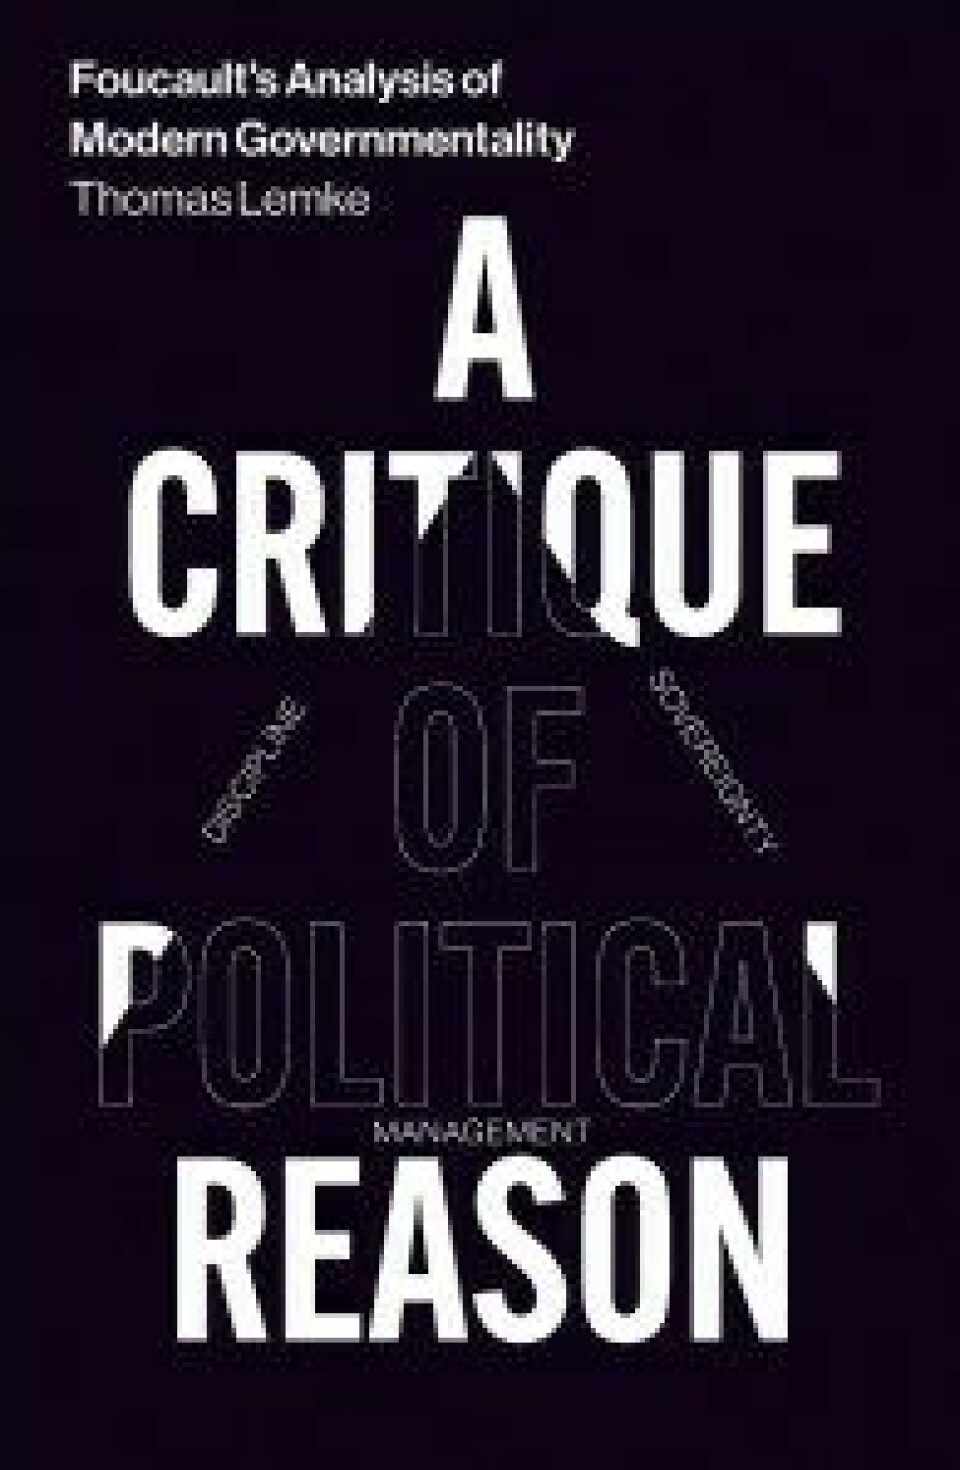 A critique of political reason; Foucault’s analysis of modern Governmentality, av Thomas Lemke (Verso 2019).